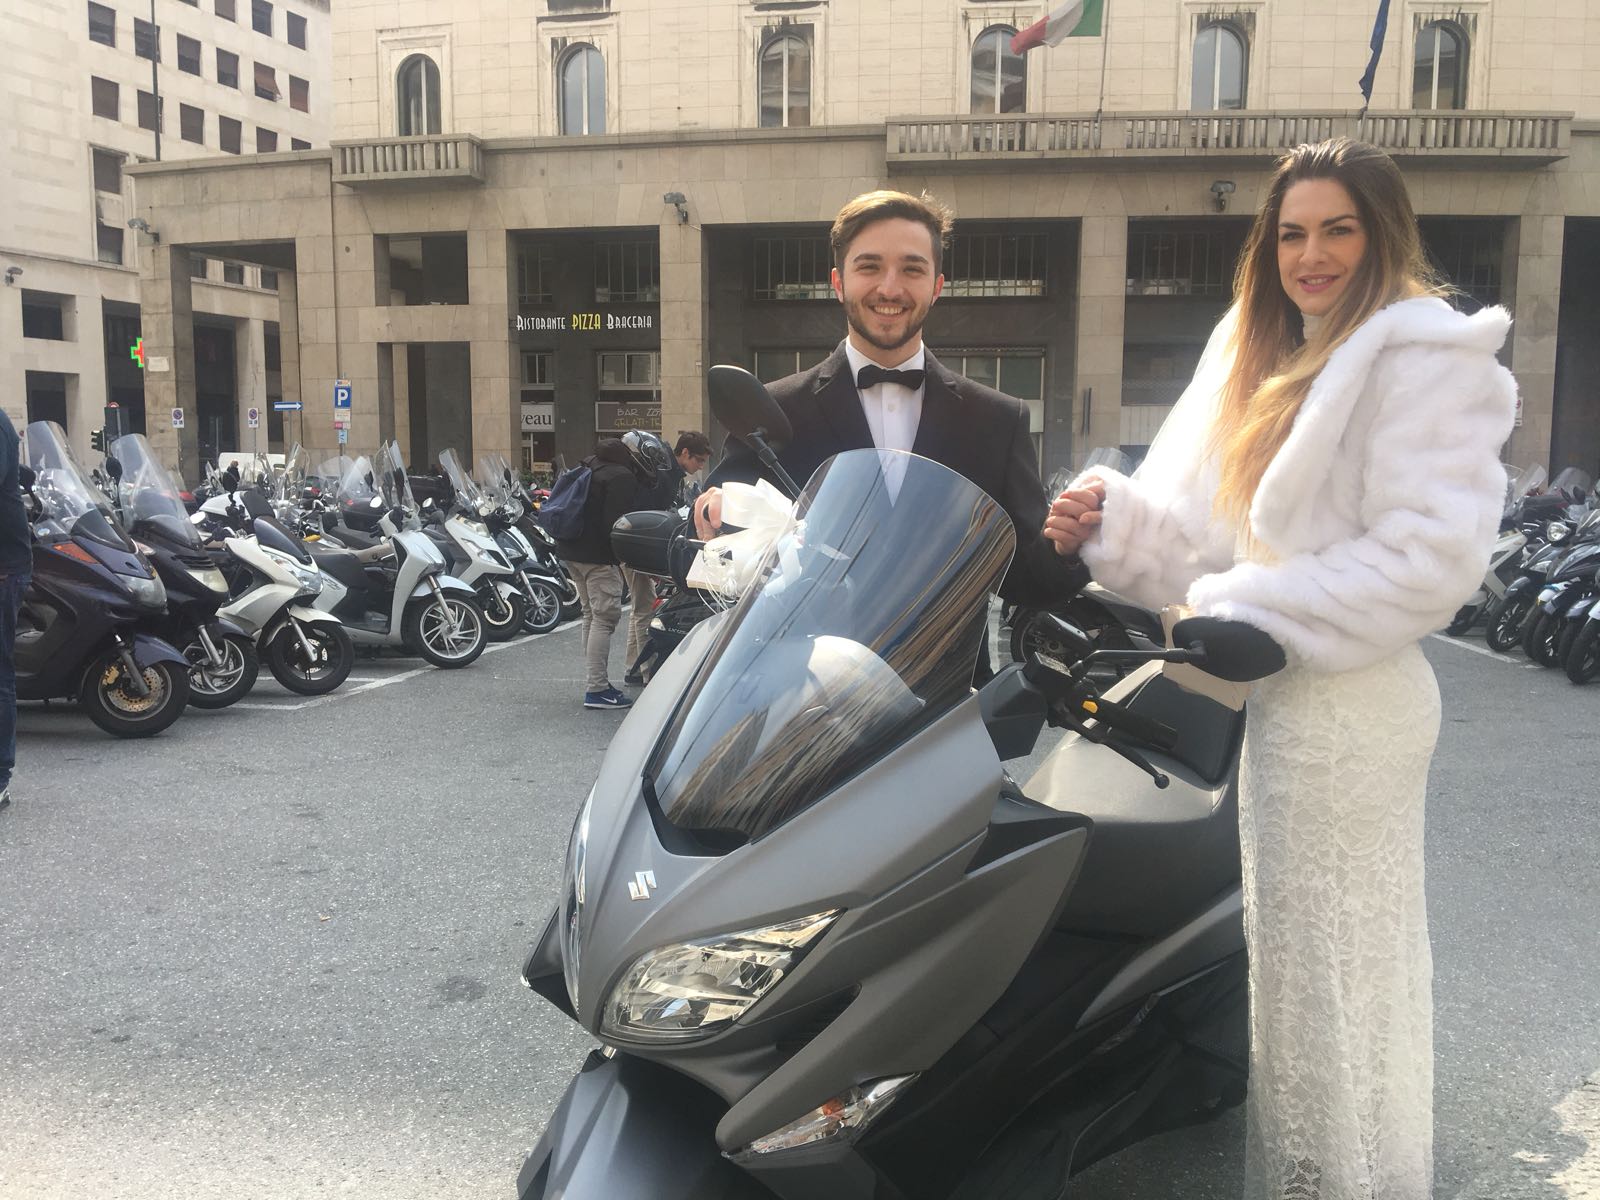  Lo “Sposati in BURGMAN Tour” nelle piazze italiane